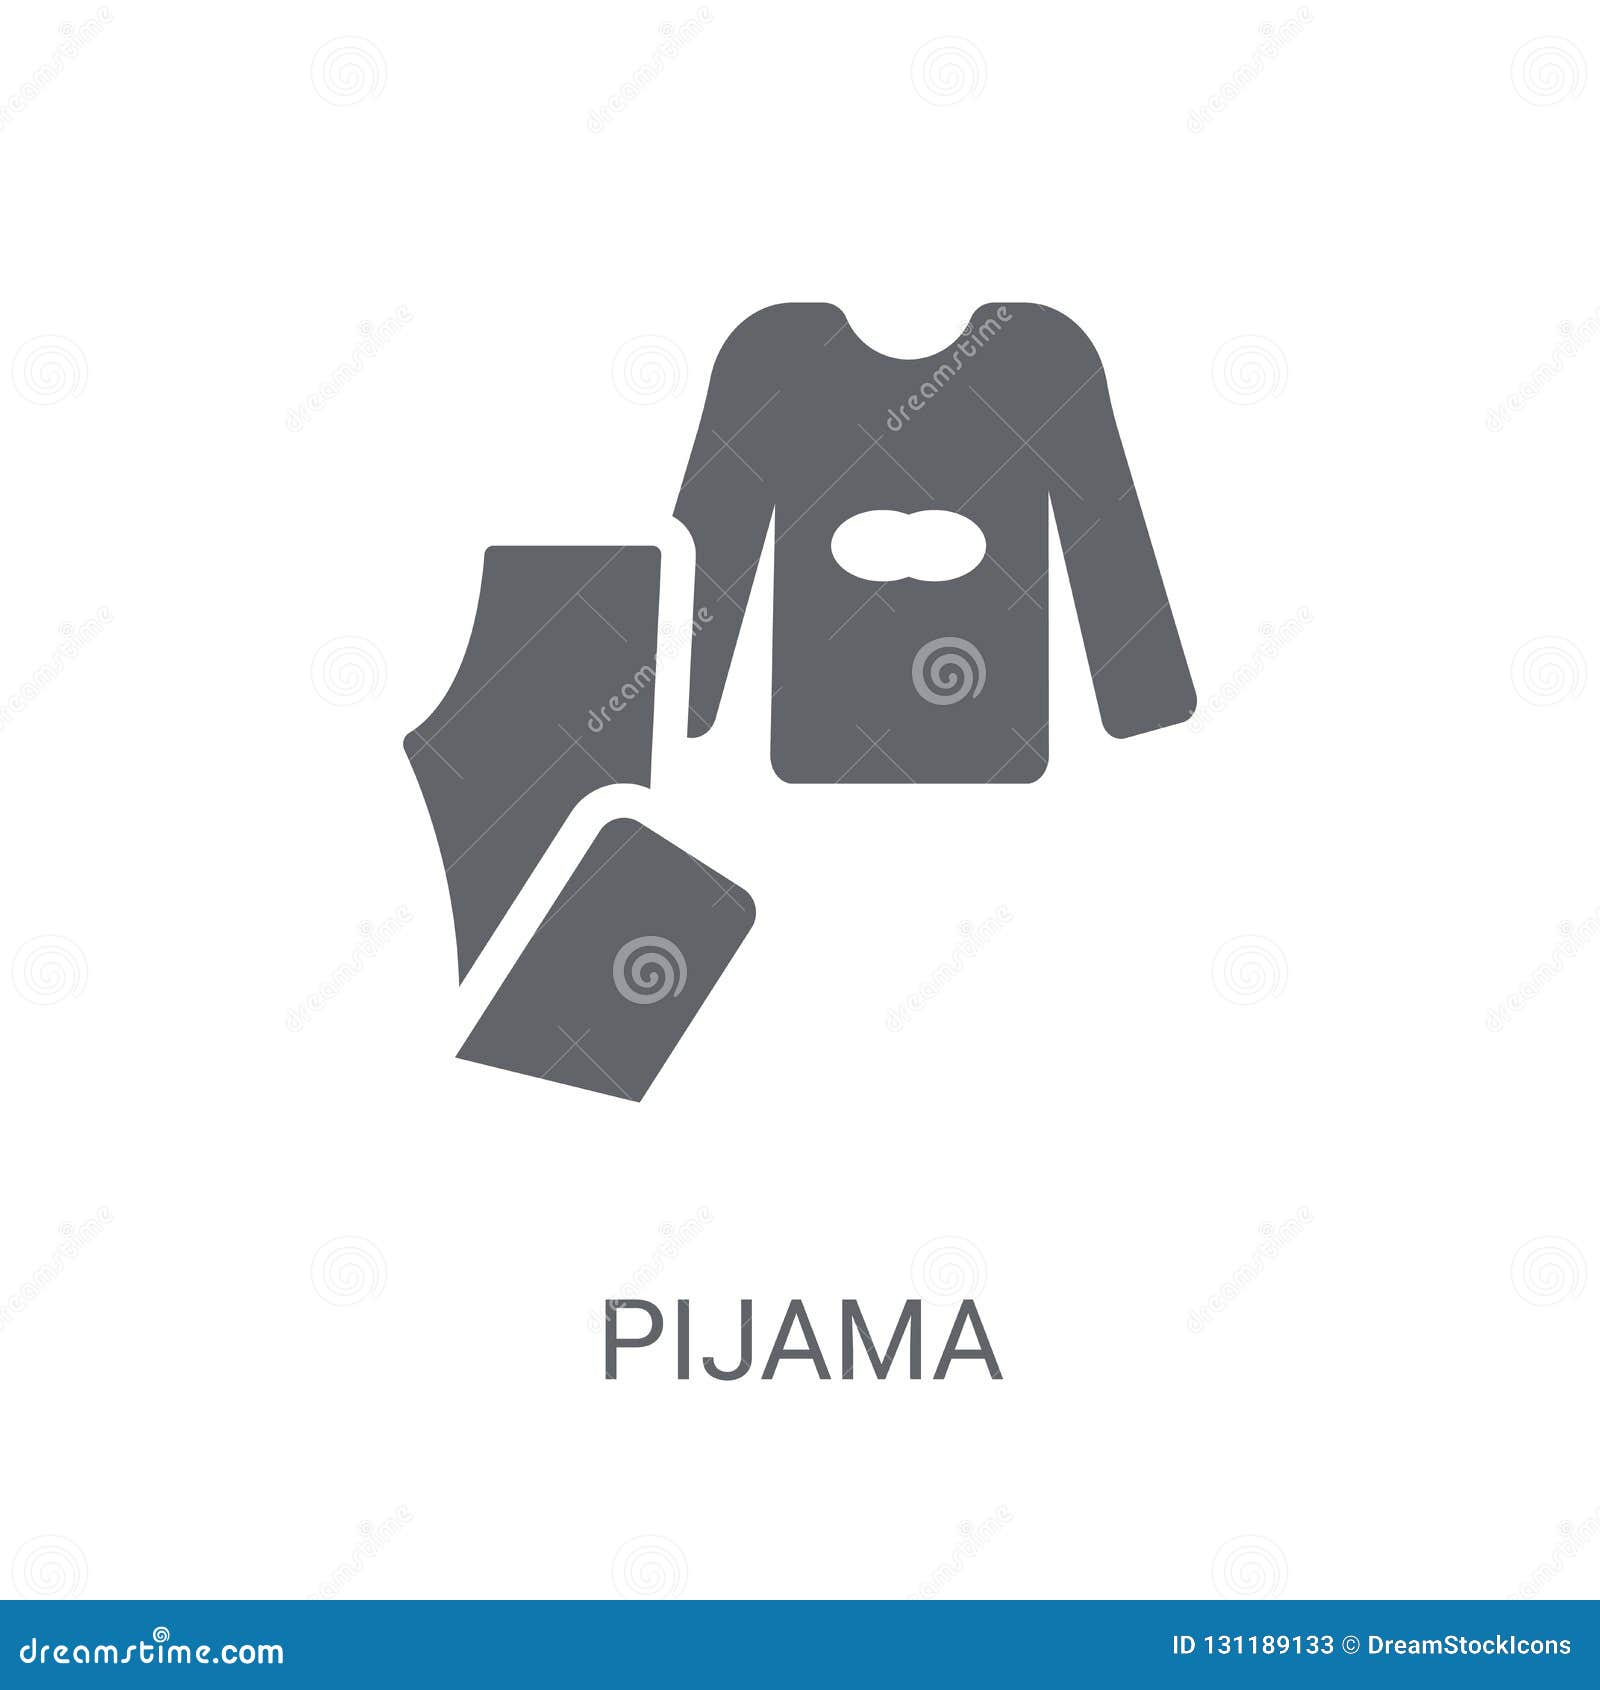 pijama icon. trendy pijama logo concept on white background from